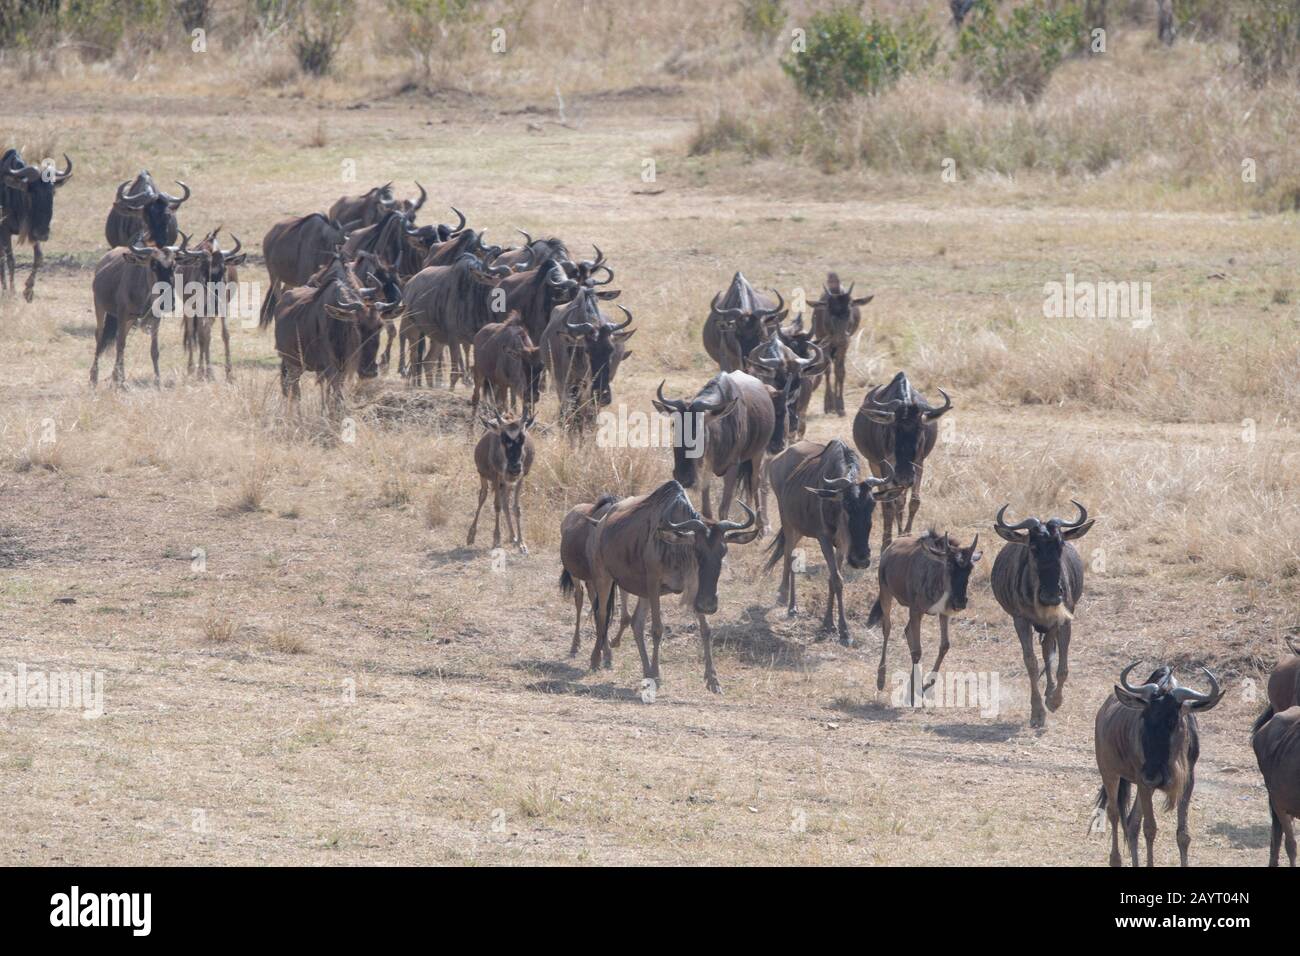 Wildebeests, also called gnus or wildebai, migrating through the grasslands towards the Mara River in the Masai Mara National Reserve in Kenya. Stock Photo